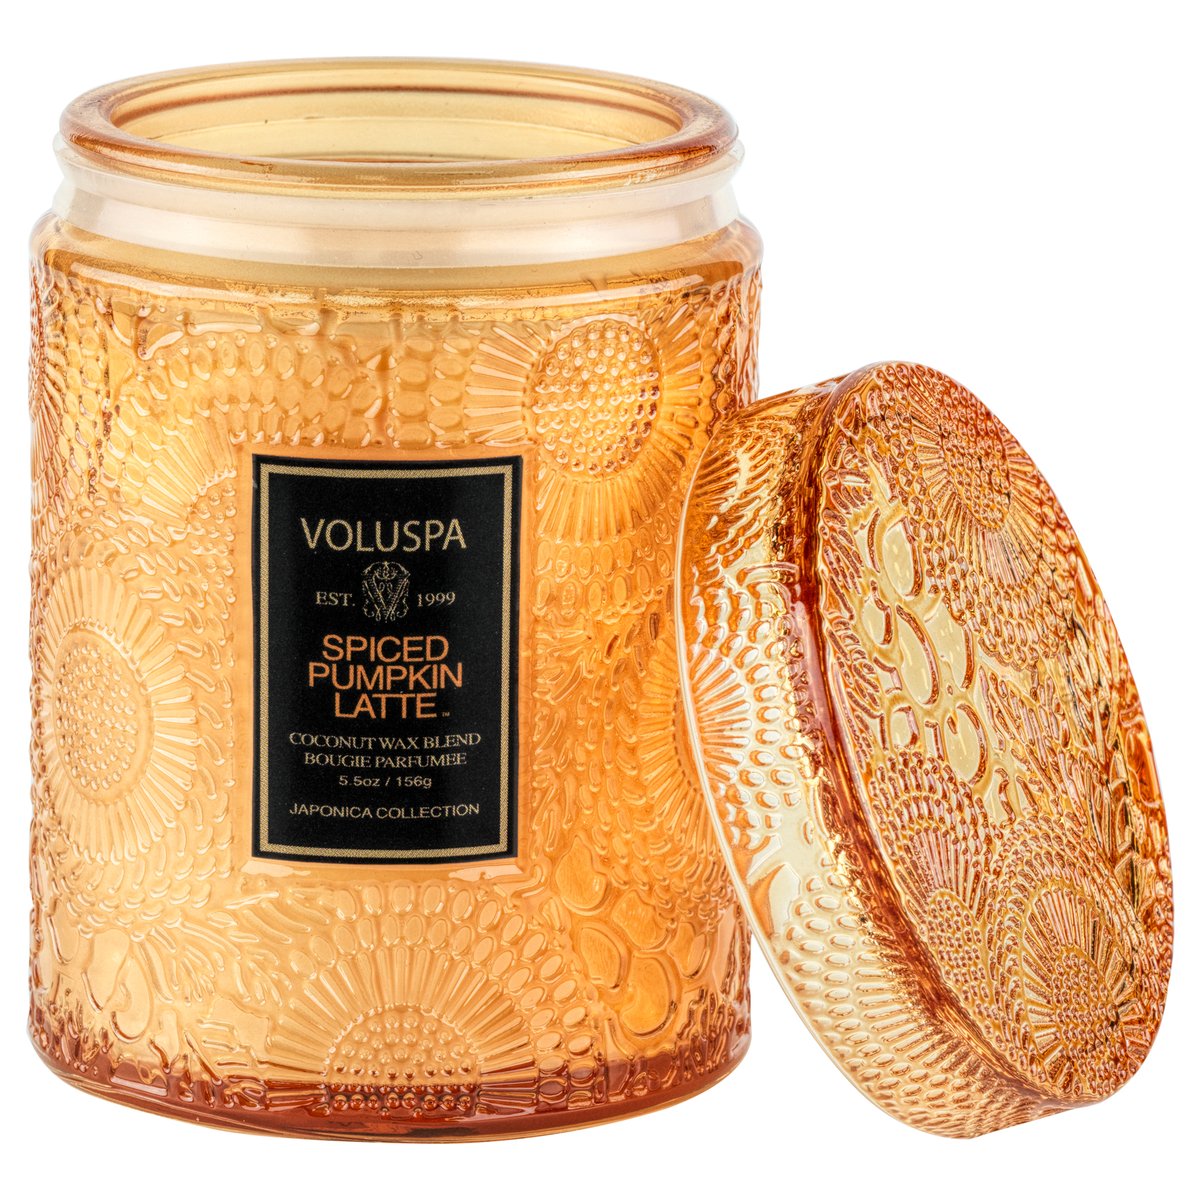 Voluspa - Spiced Pumpkin Latte - Small Jar Candle